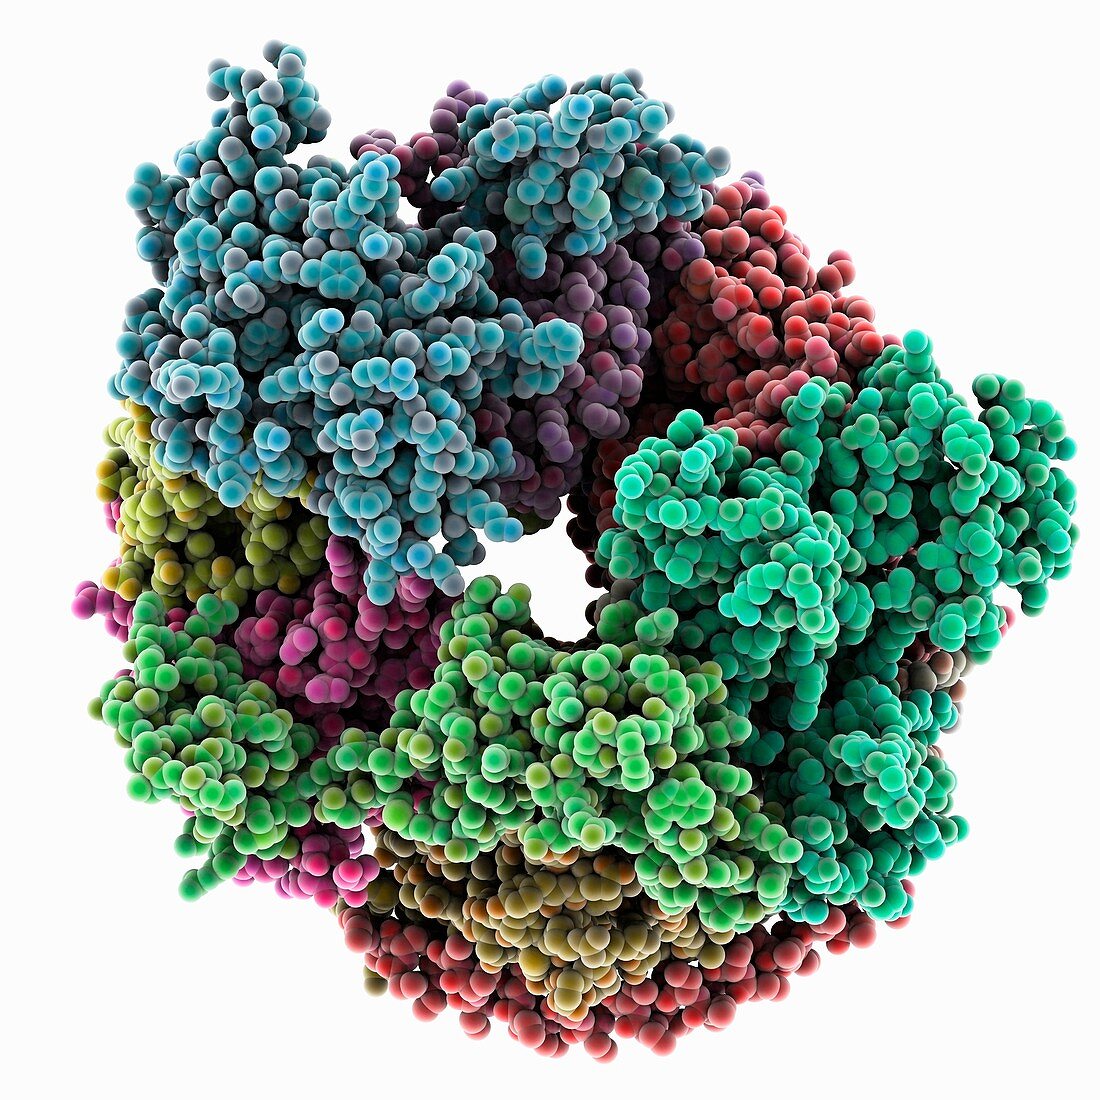 RNA exosome complex,molecular model